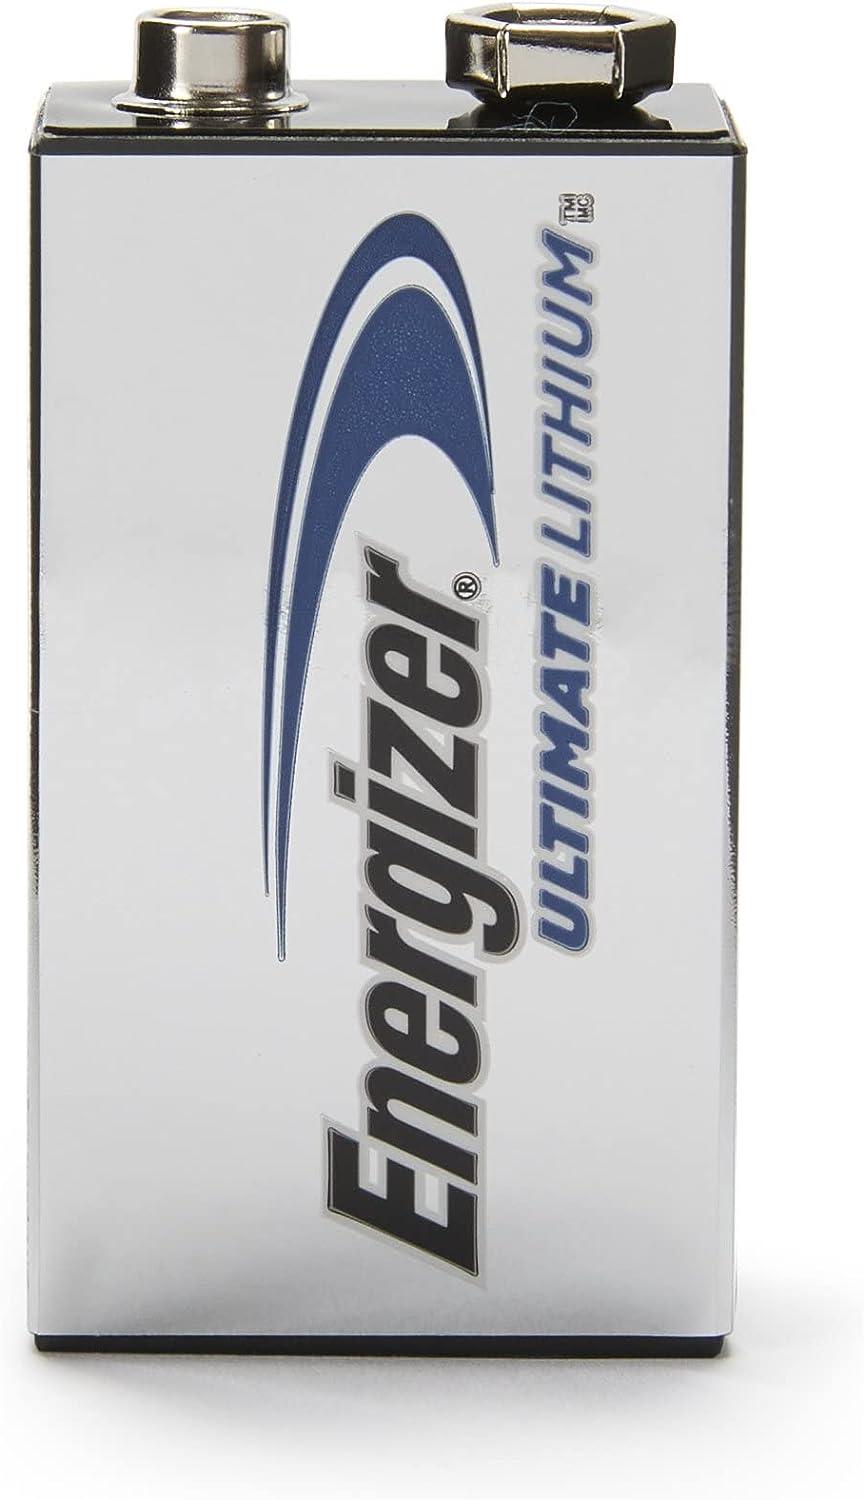 Energizer Ultimate Lithium  Best Batteries 12pk. 